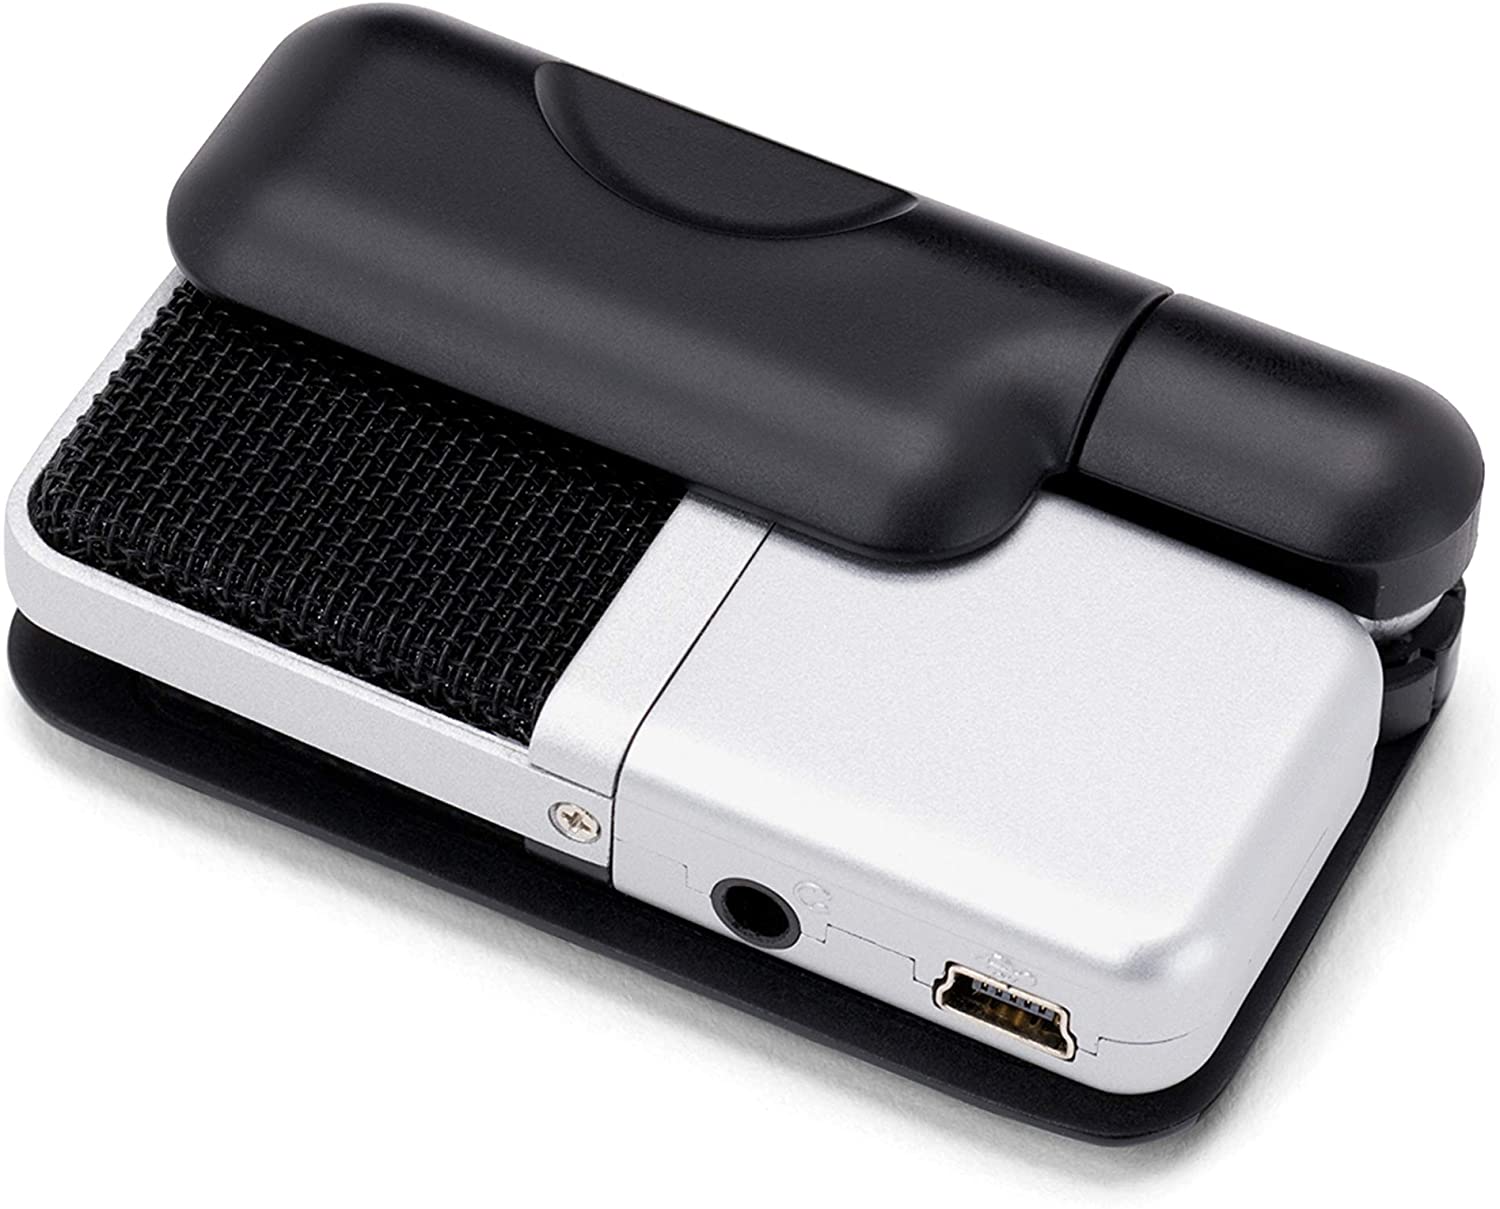 Samson USB 24-bit Multi Pattern Studio Condenser Mic with Audio Interface and SAGOMIC Go Mic Portable USB Condenser Microphone - Pro-Distributing